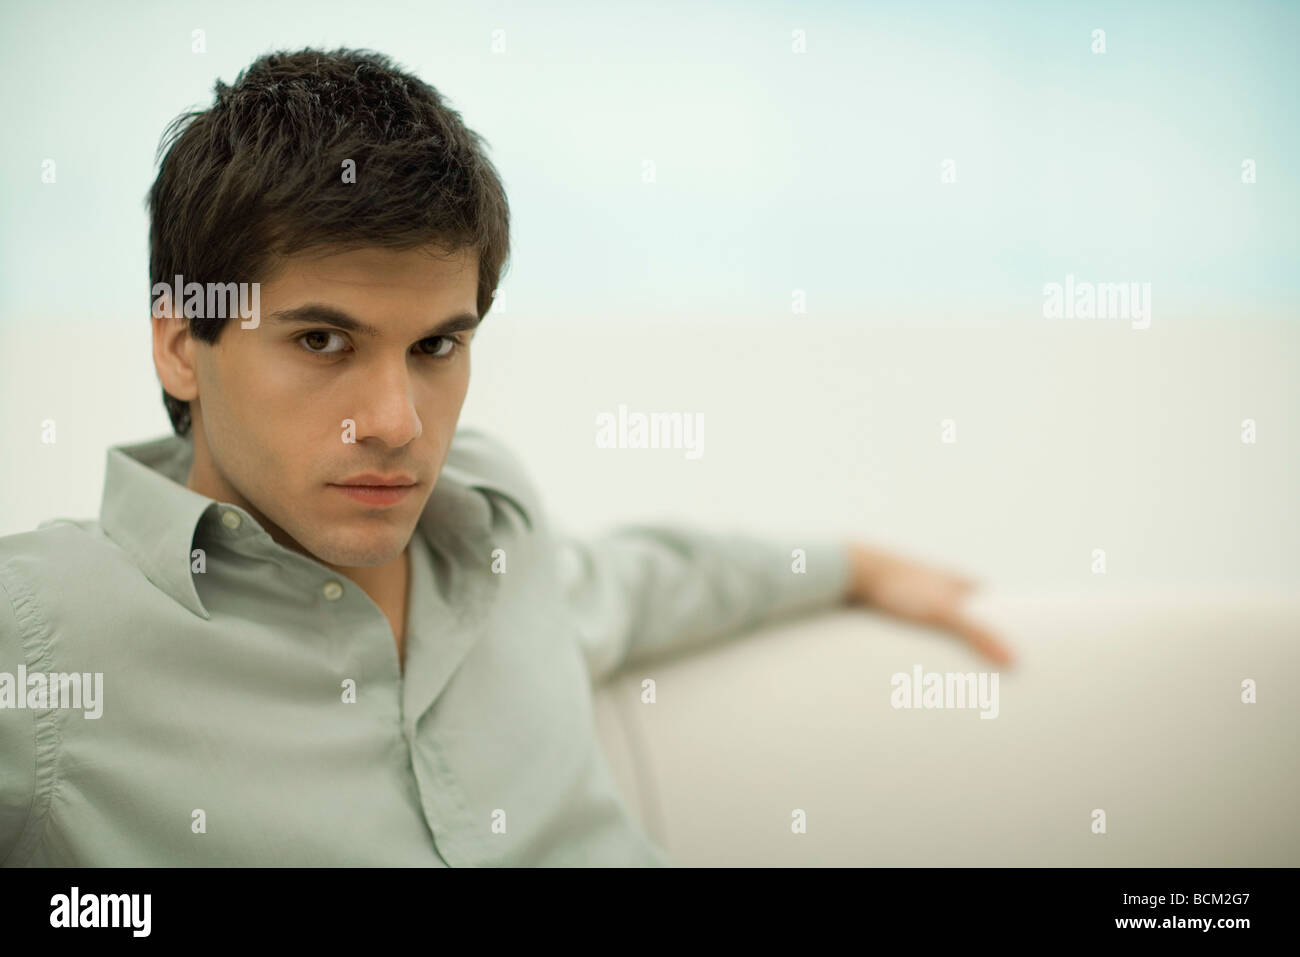 Man looking arrogantly at camera, portrait Stock Photo